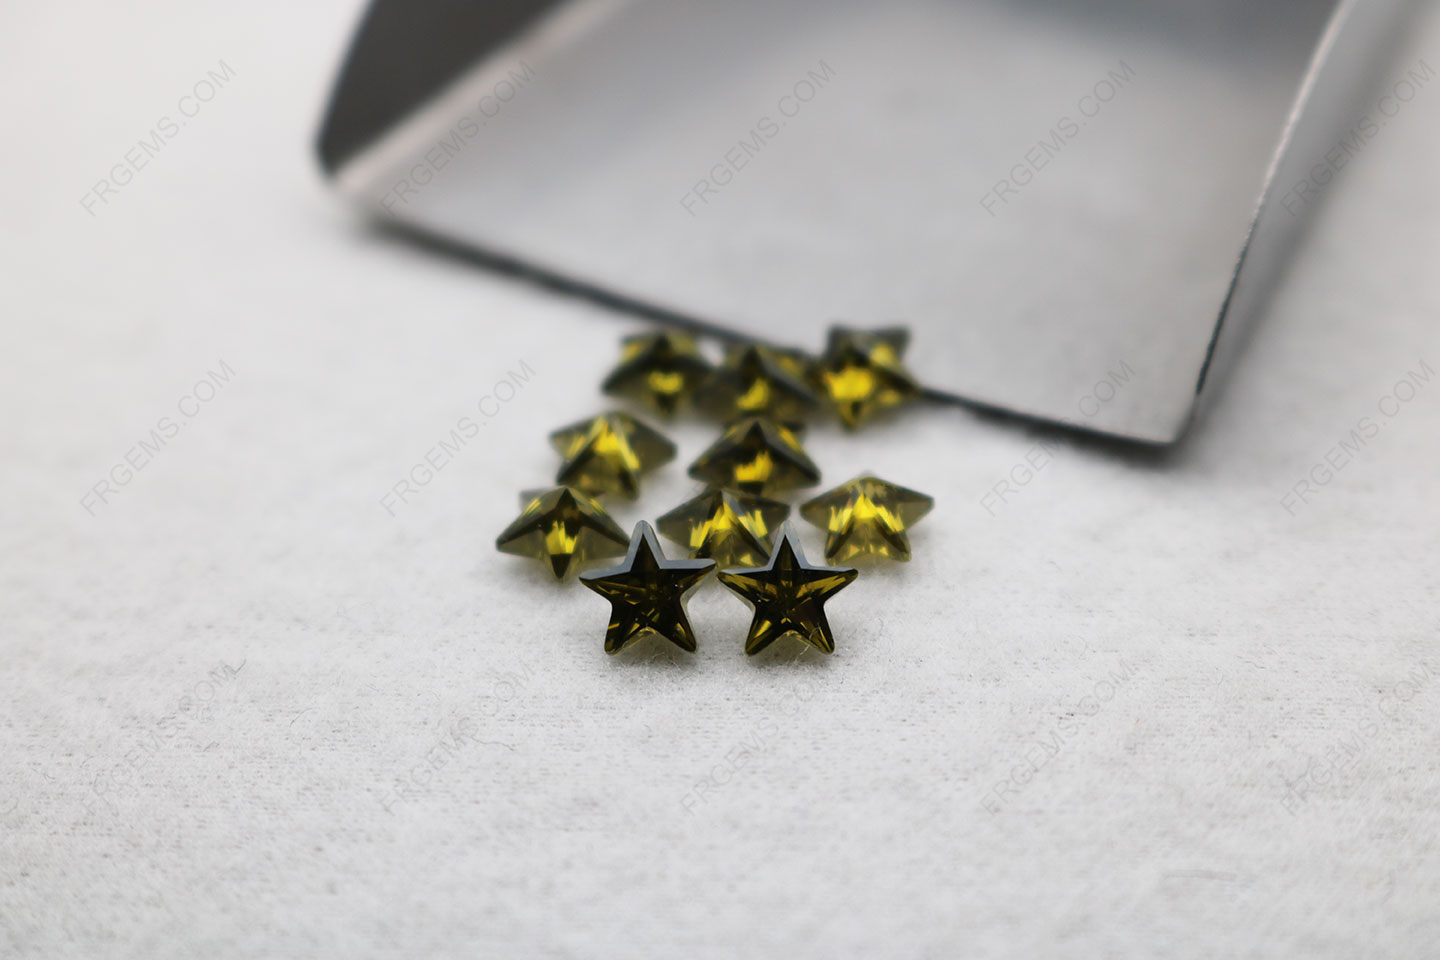 Cubic Zirconia Peridot Dark shade Five Piont Star Cut 6x6mm gemstones CZ28 IMG_5454